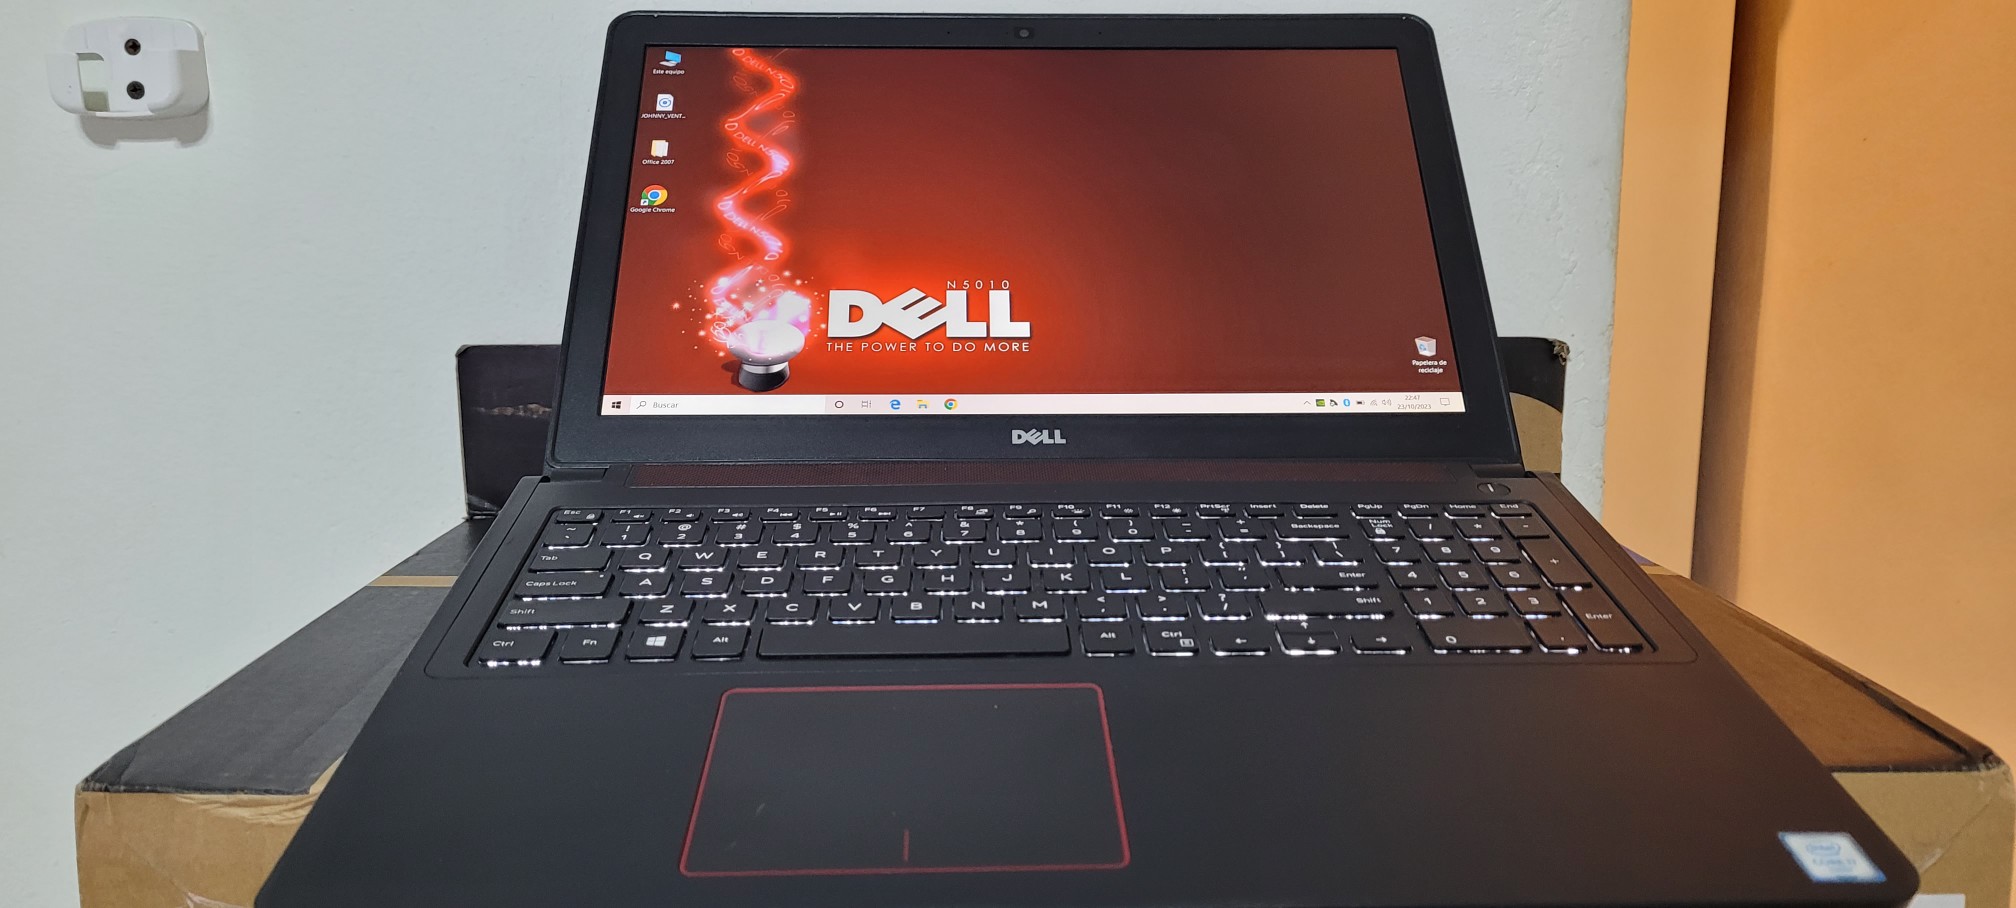 computadoras y laptops - Laptop Dell gamer 17 Pulg intel Core i7 Ram 16gb Nvidea Gtx 960m 4gb Dedicada 0